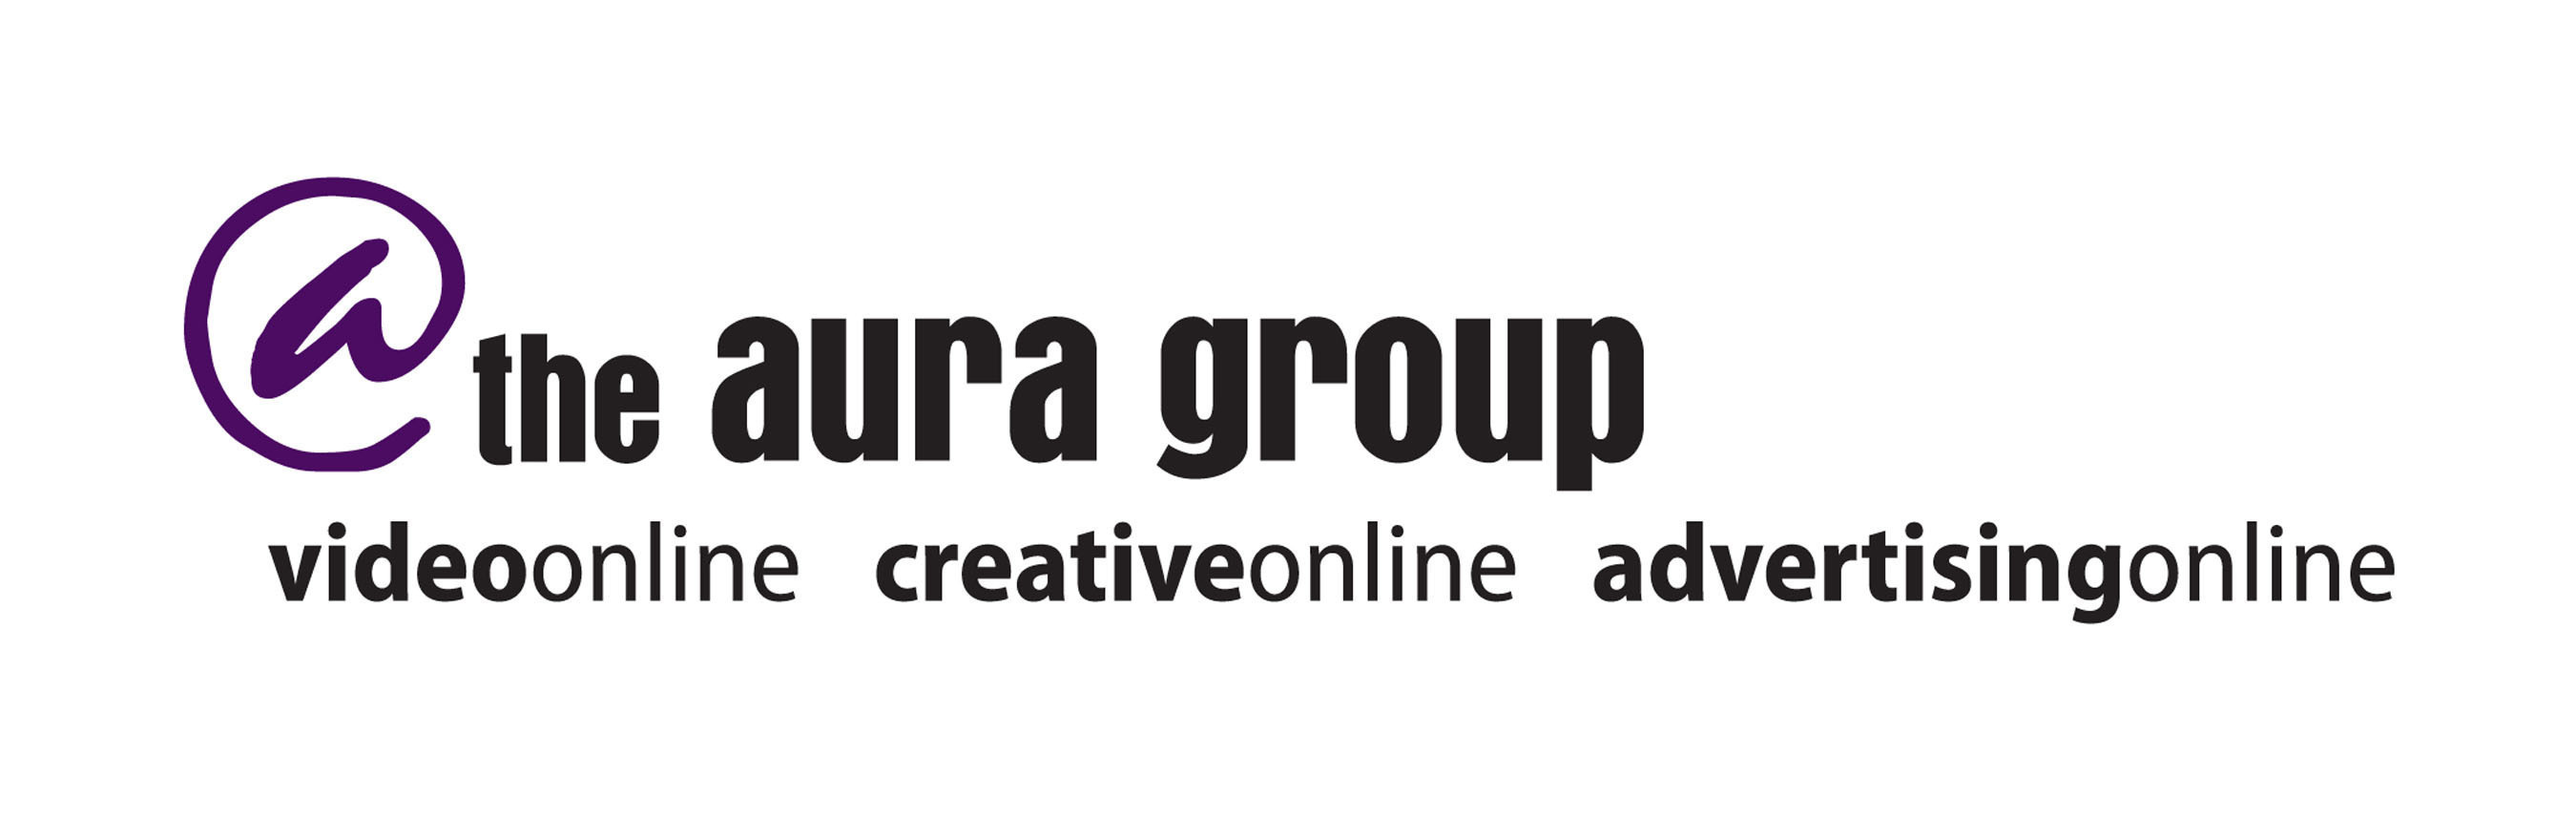 Offering creative online exposure through rich media technologies and applications. (PRNewsFoto/The Aura Group) (PRNewsFoto/)